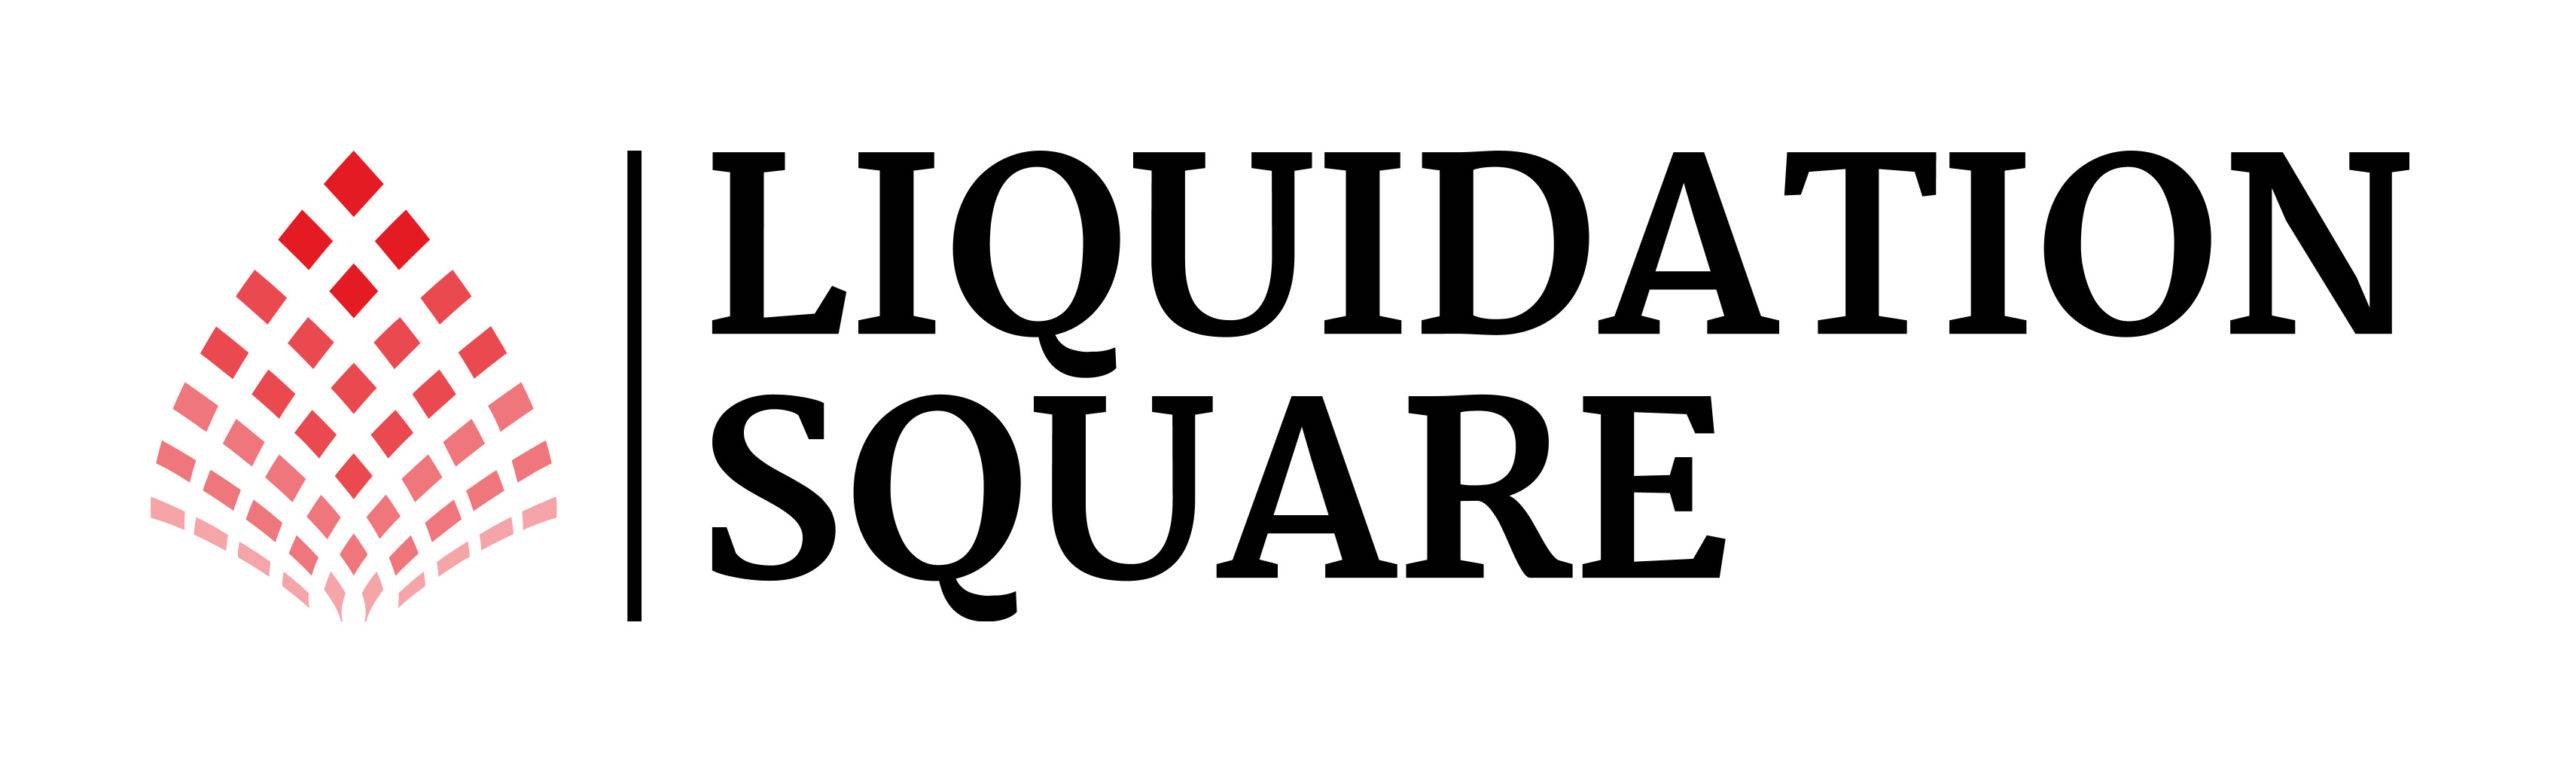 Pants | Liquidation Square